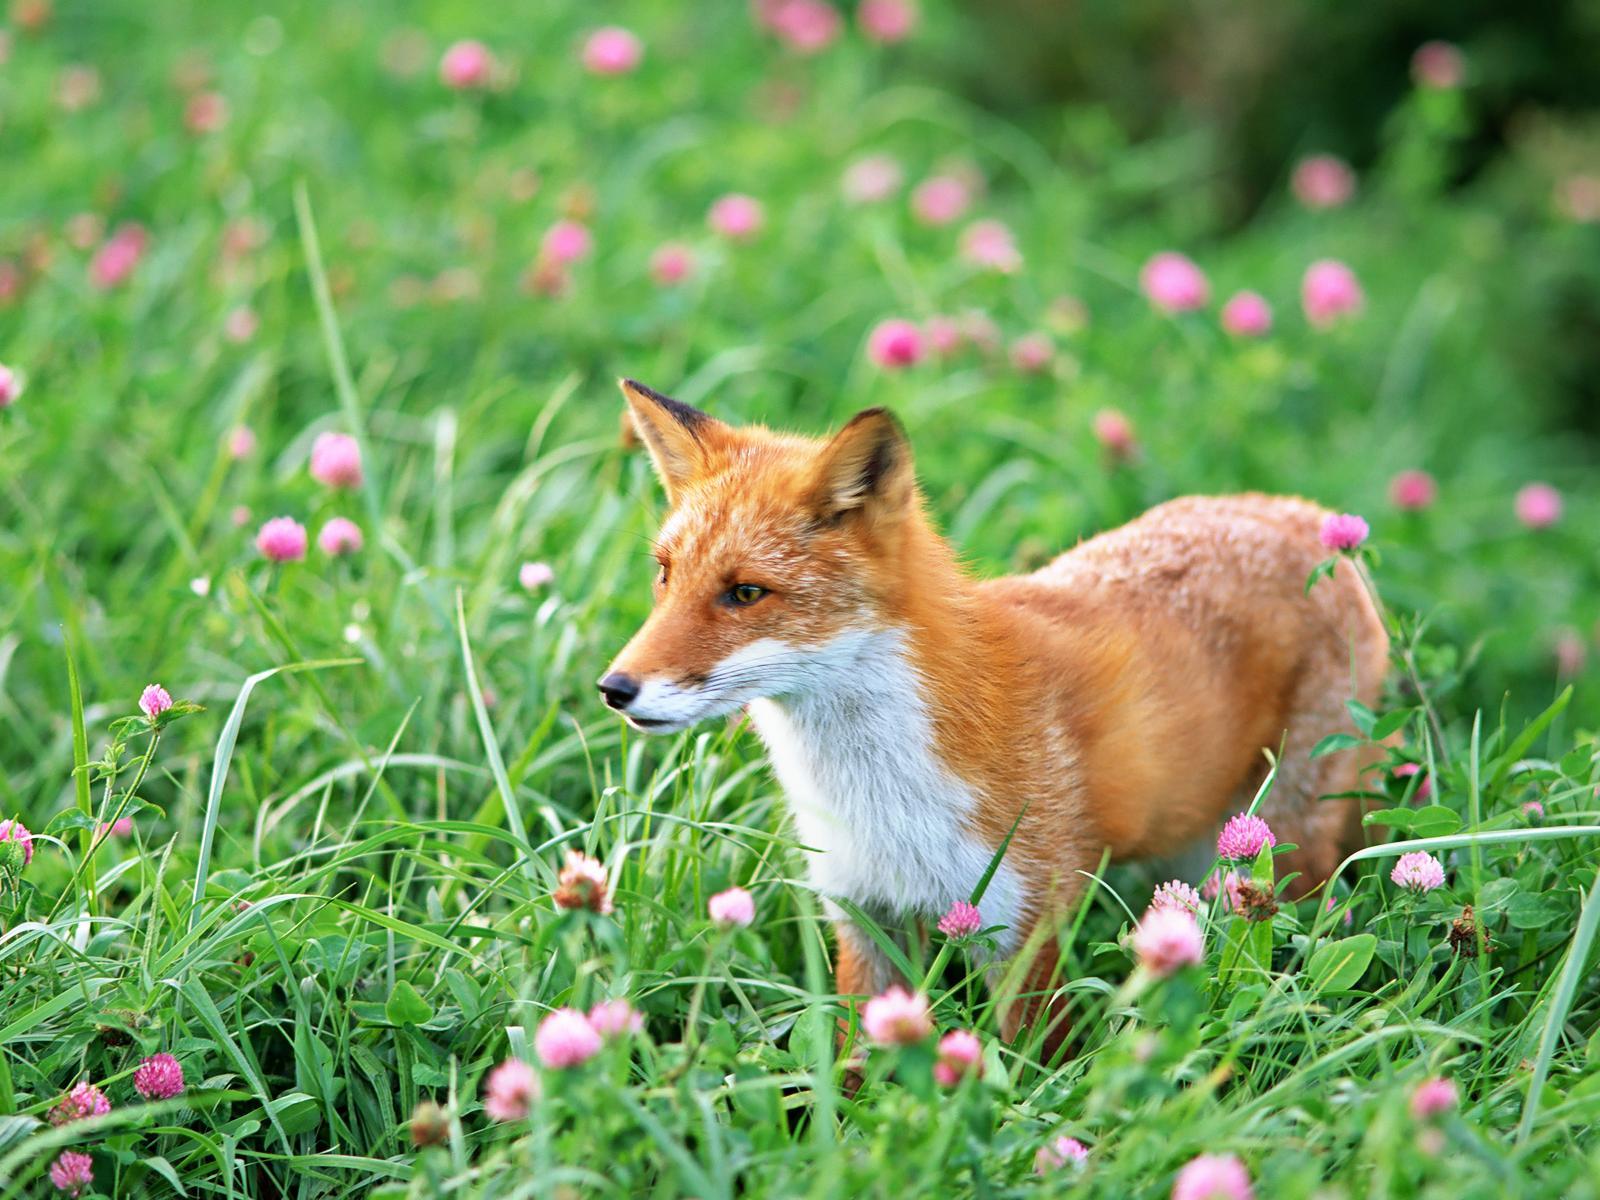 150-1504435_adorable-baby-fox.jpg